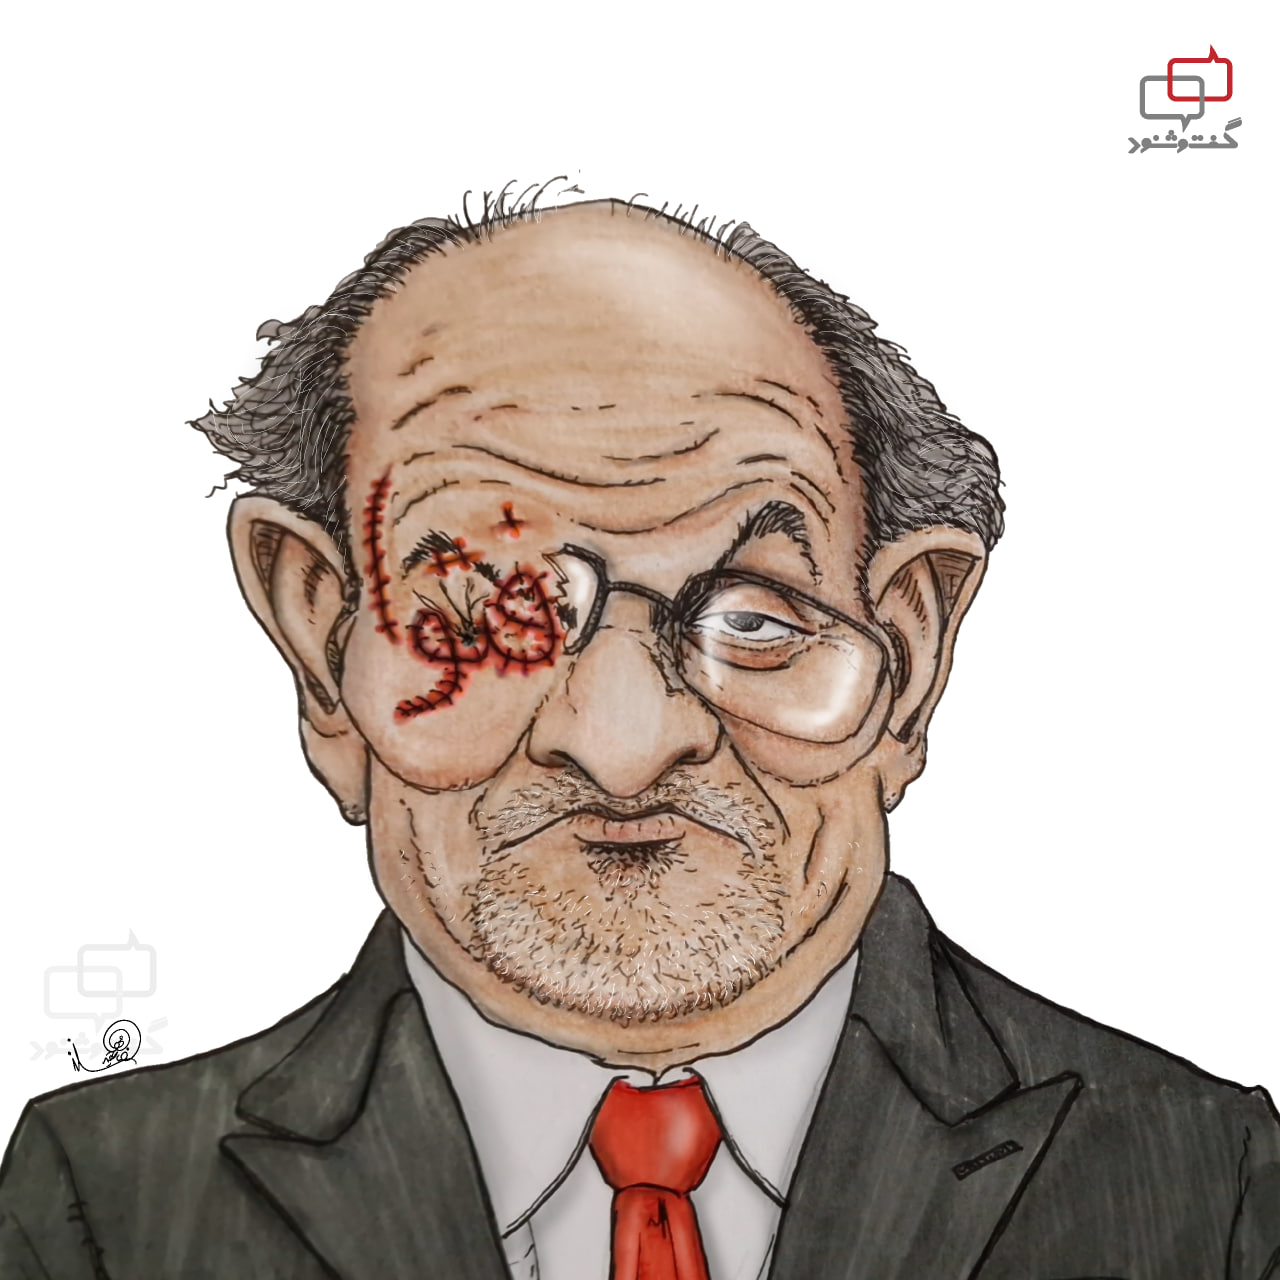 Fatva-to-kill-Salman-Rushdie